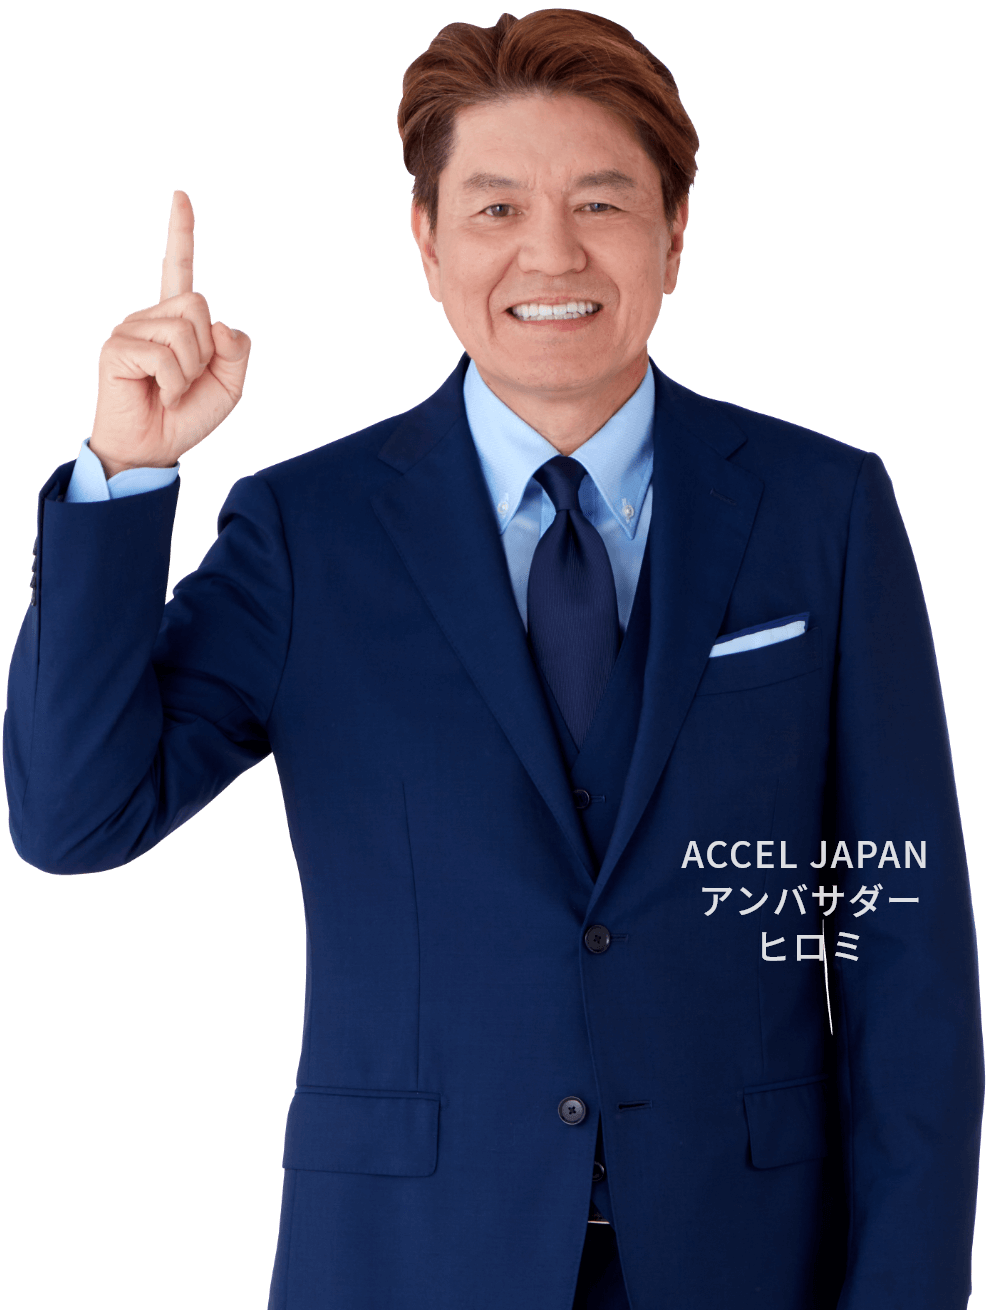 ACCEL JAPAN アンバサダー ヒロミ